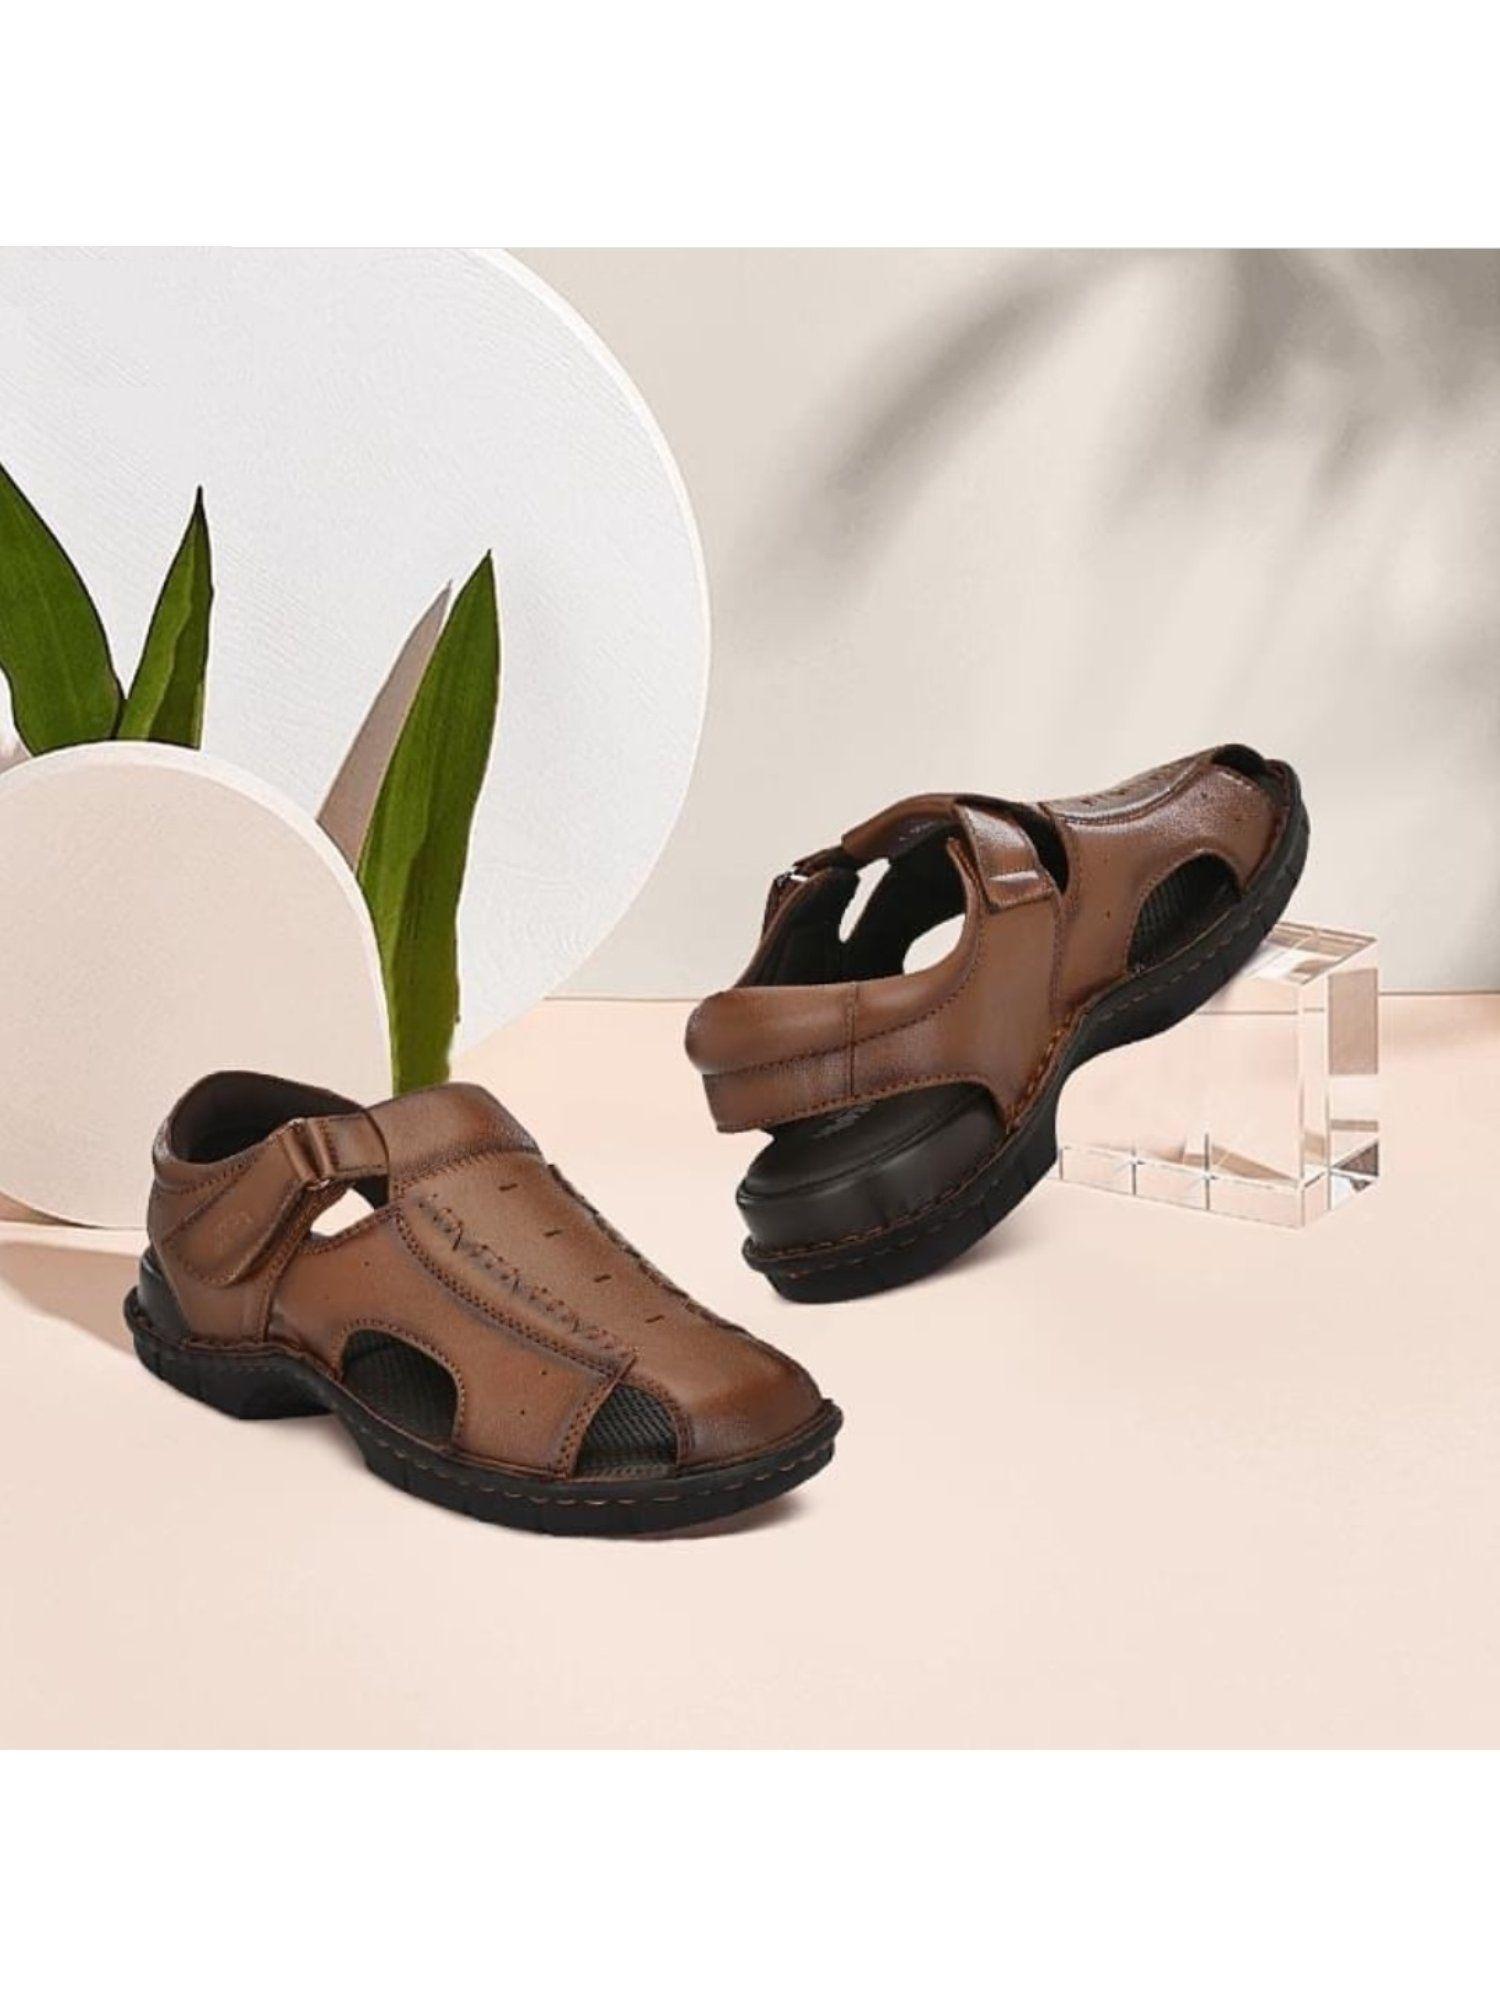 men's tan leather comfort sandals with velcro closure